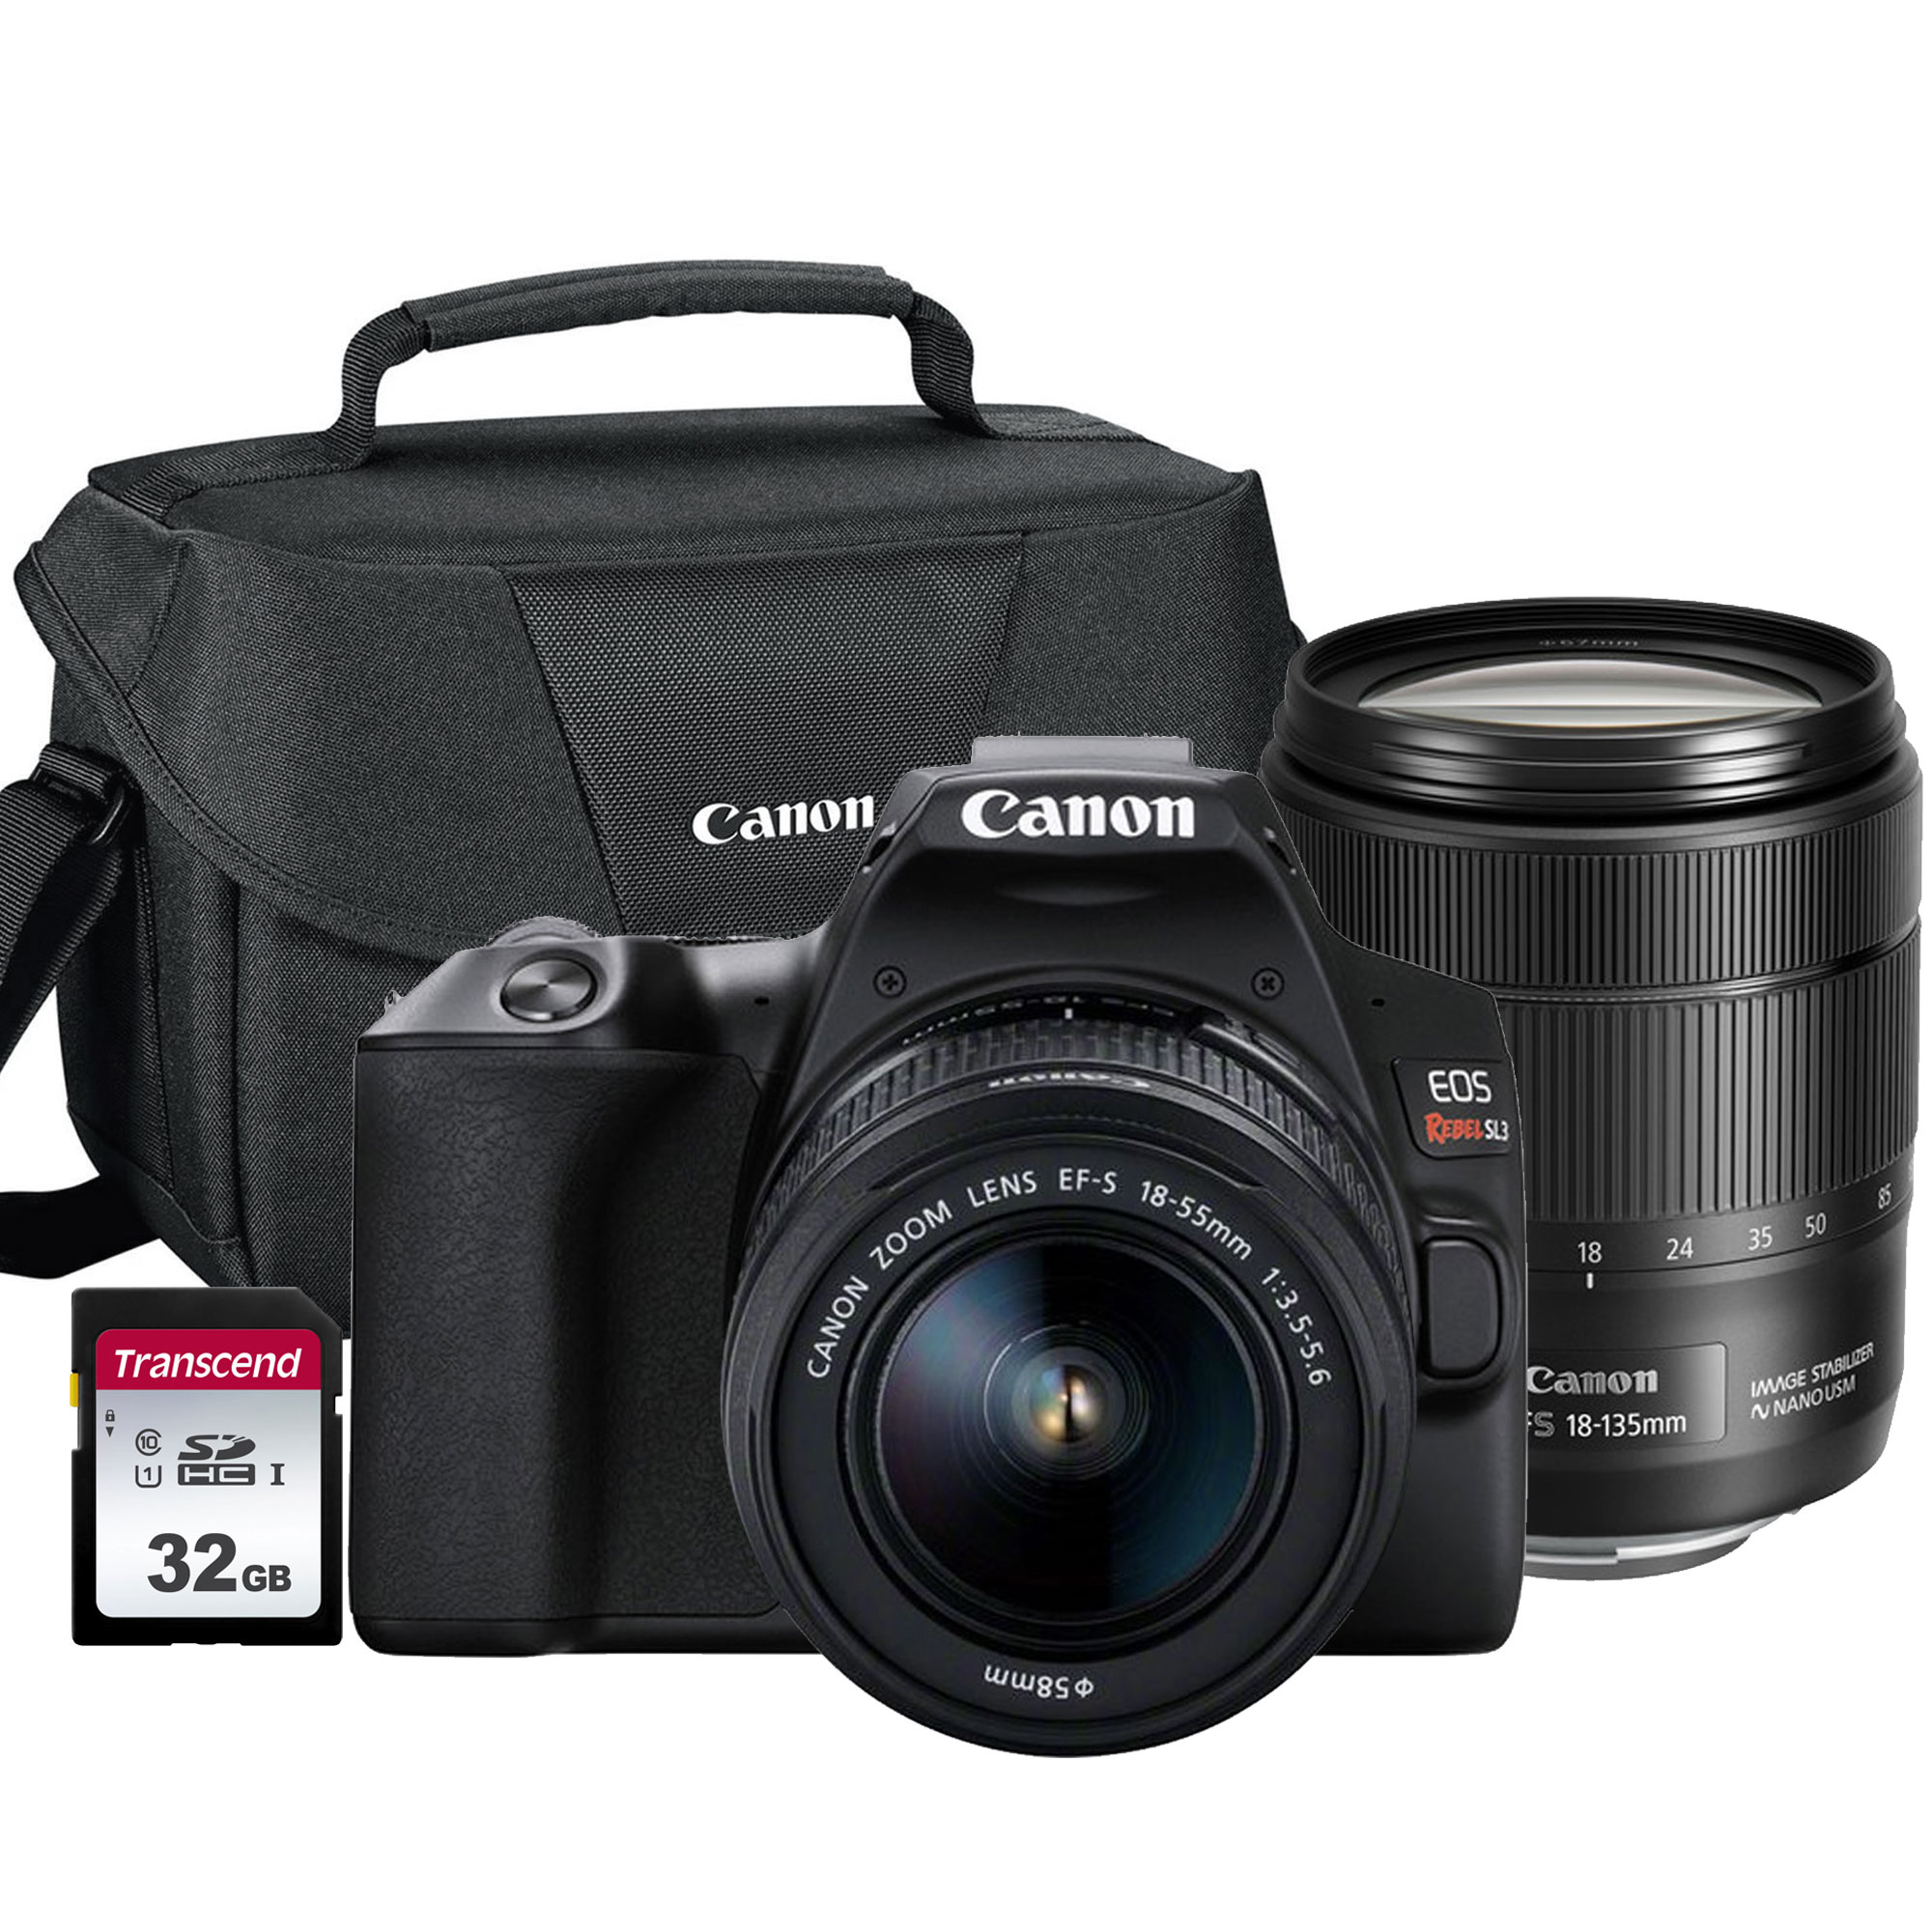 Nikon Canon EOS Rebel SL3 DSLR Camera with 18-55mm and 18-135mm IS USM Lens Starter Kit